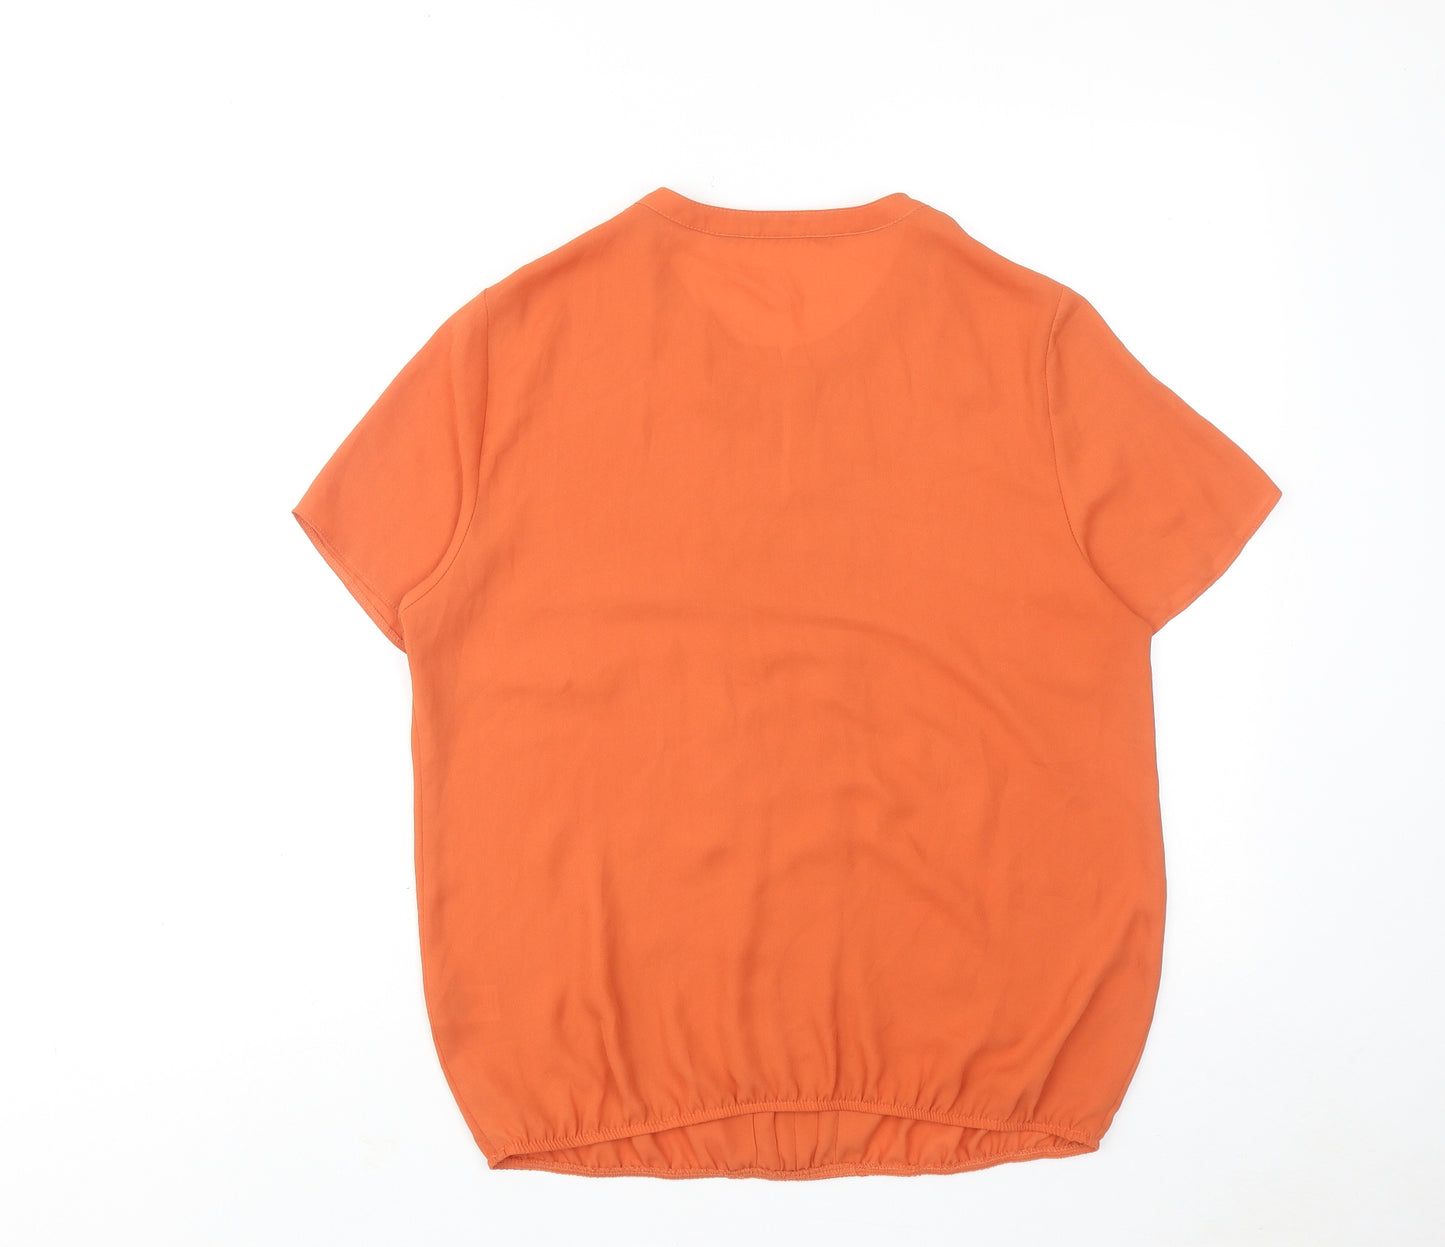 Bonmarché Womens Orange Polyester Basic Blouse Size 12 Round Neck - Front Pleat Detail